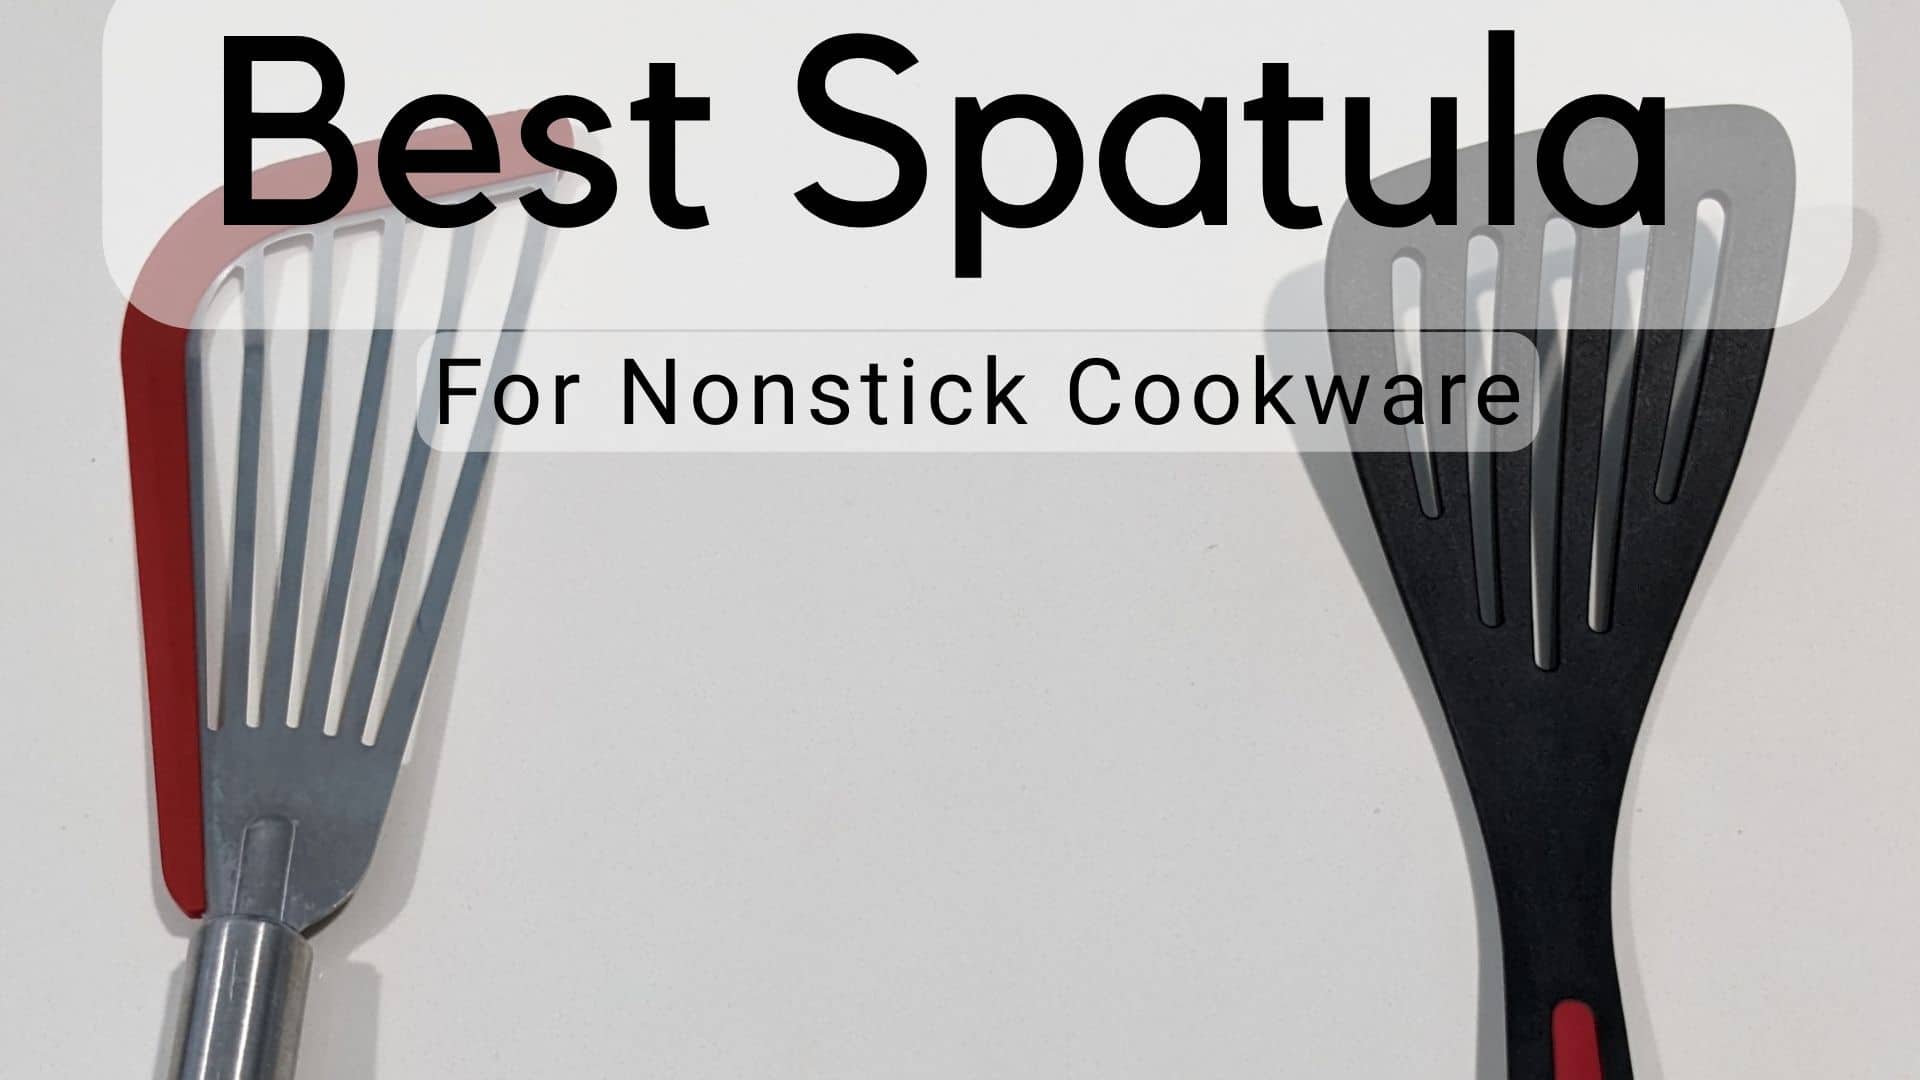 Best Spatula For Nonstick Cookware